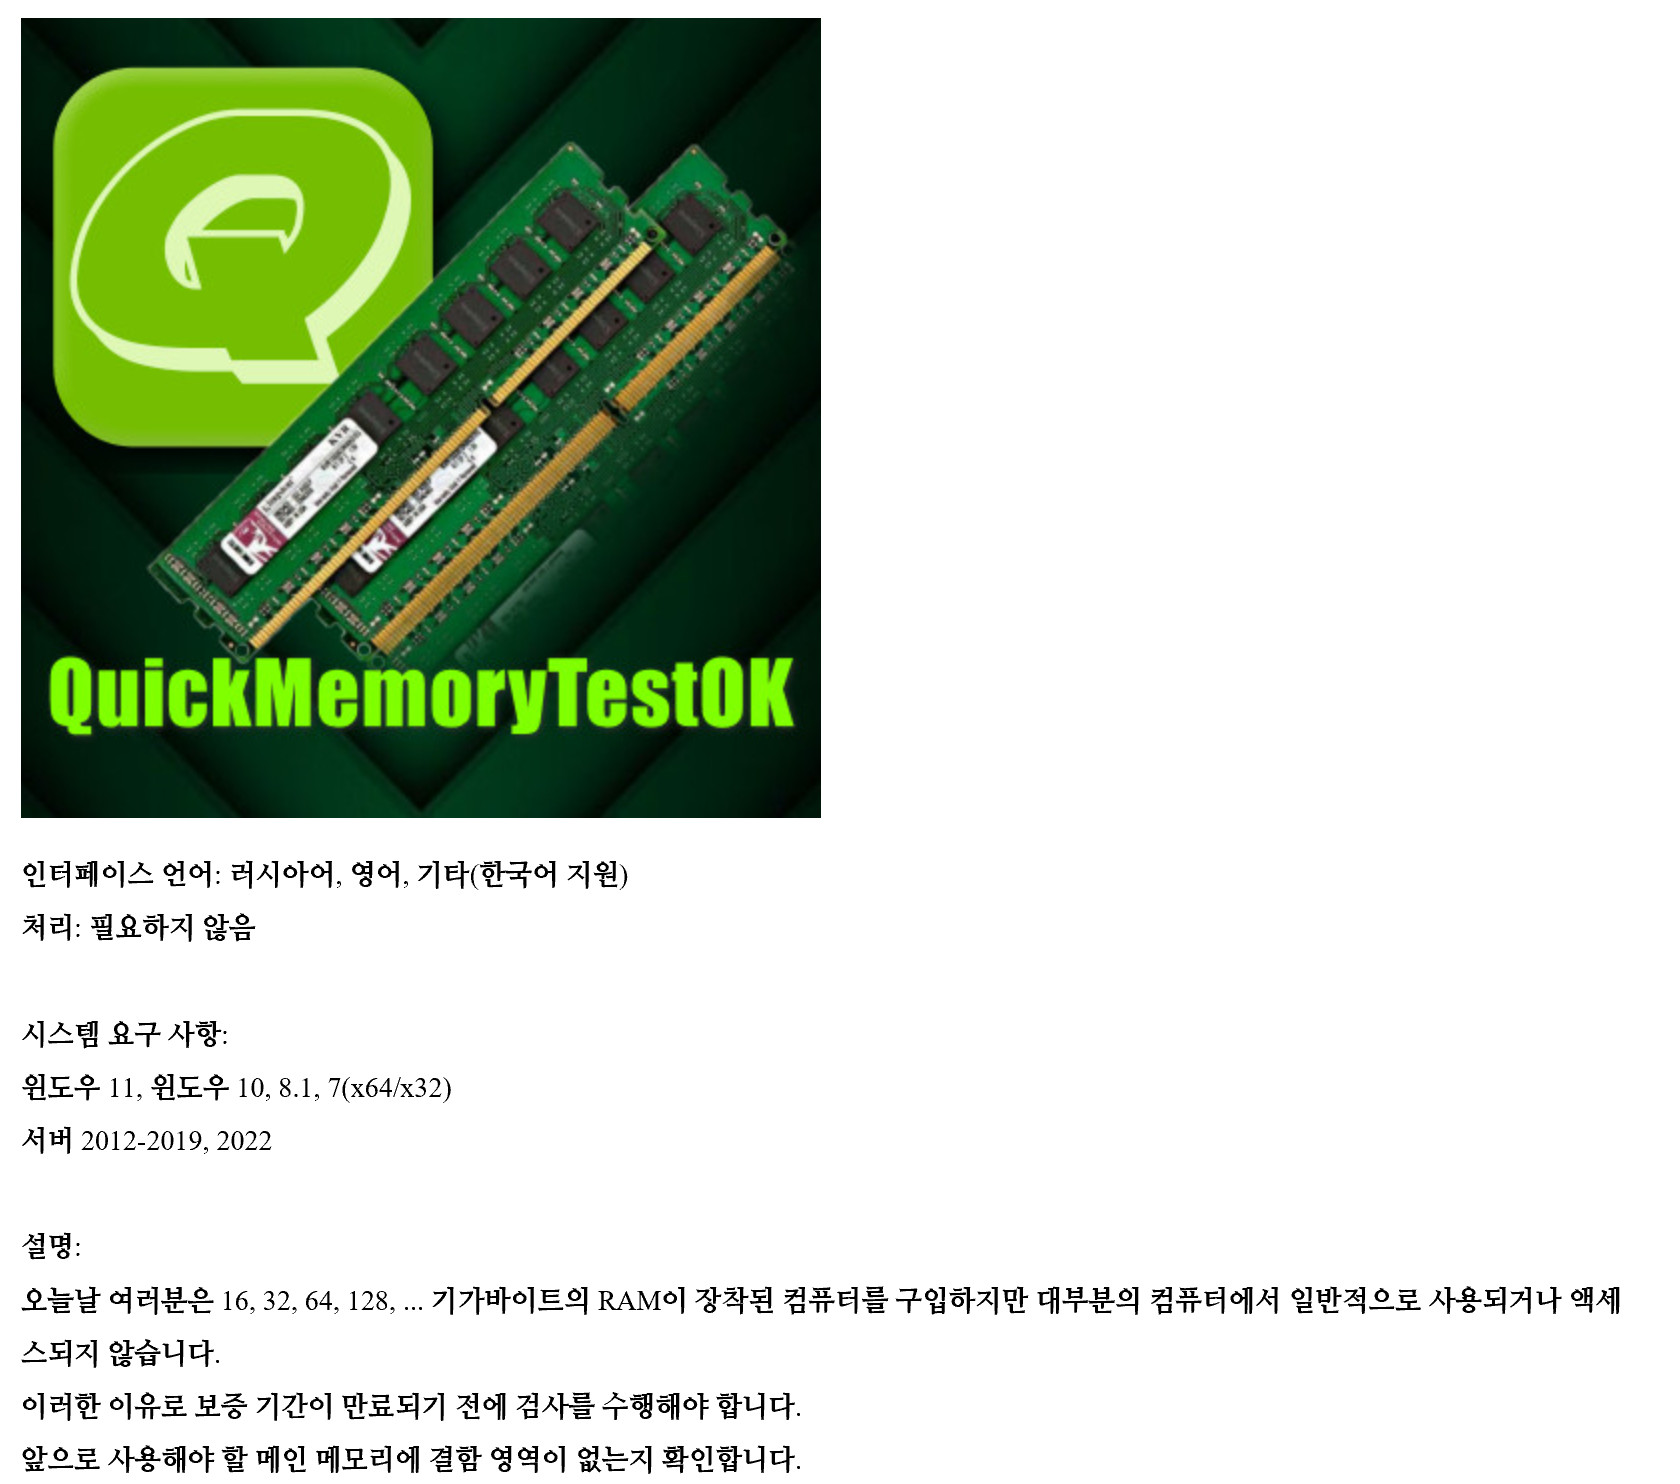 QuickMemoryTestOK 4.67 instal the new version for iphone